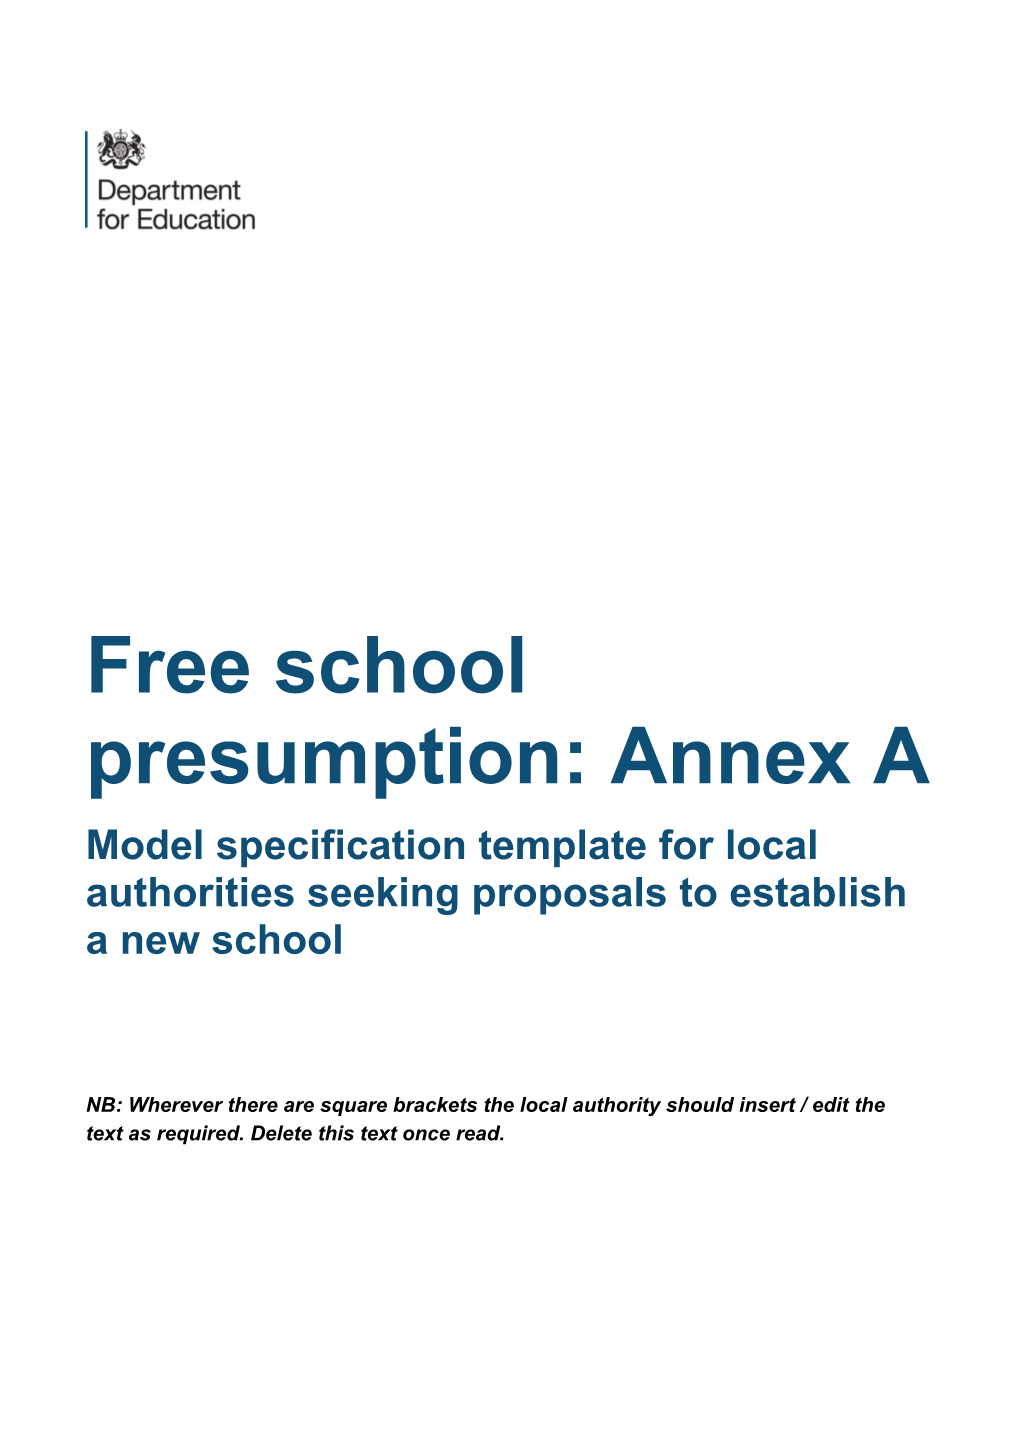 Free School Presumption - Model Specification Template